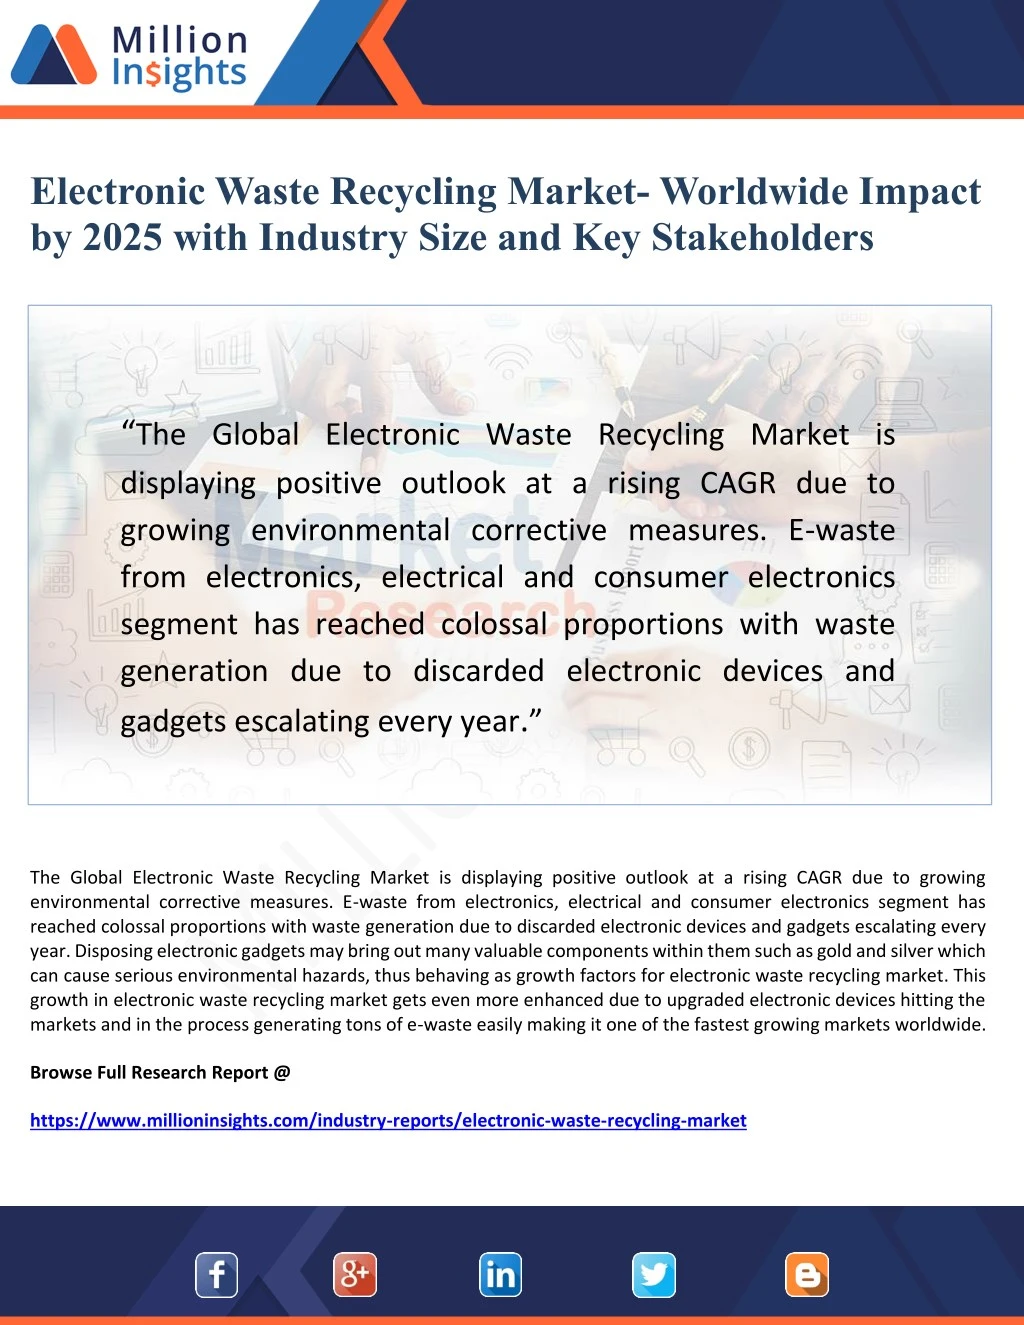 electronic waste recycling market worldwide